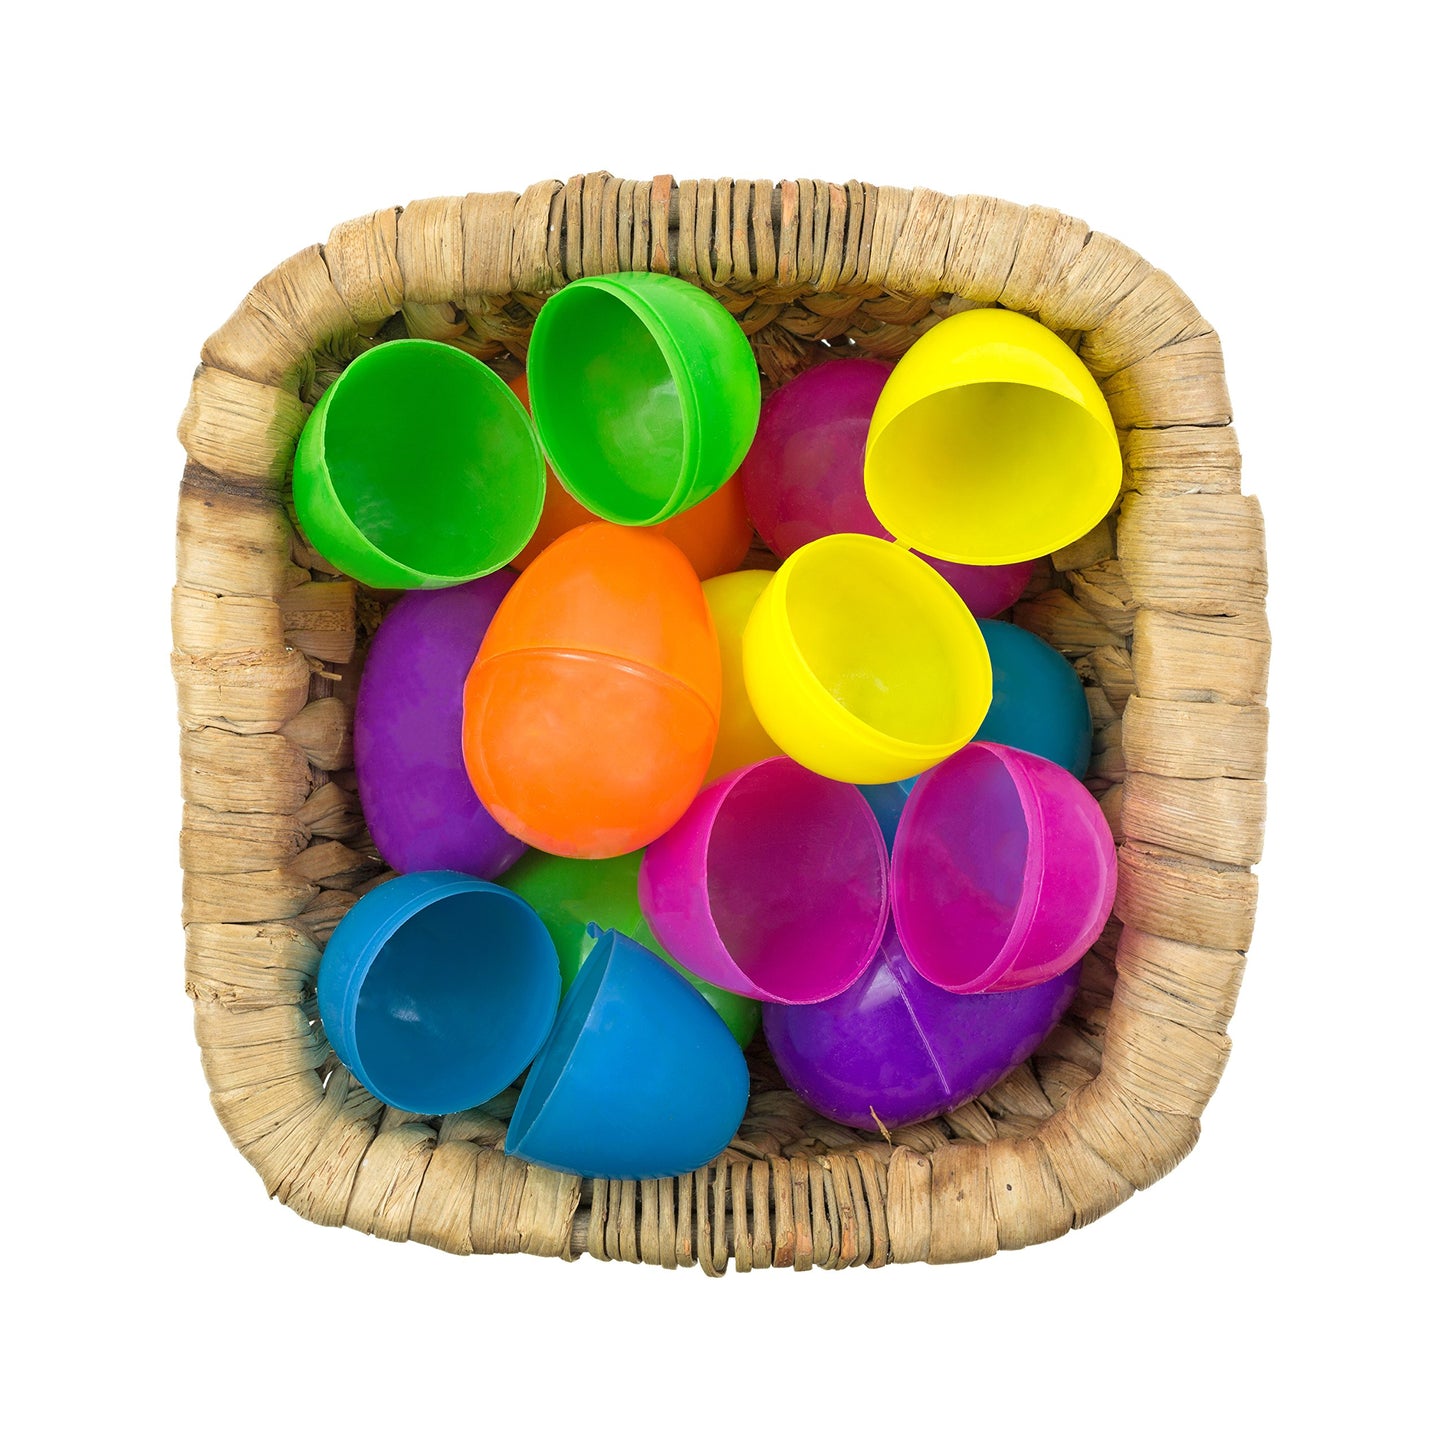 144 Plastic Easter Eggs Bulk- Hinged Fillable Easter Eggs Assorted Colors